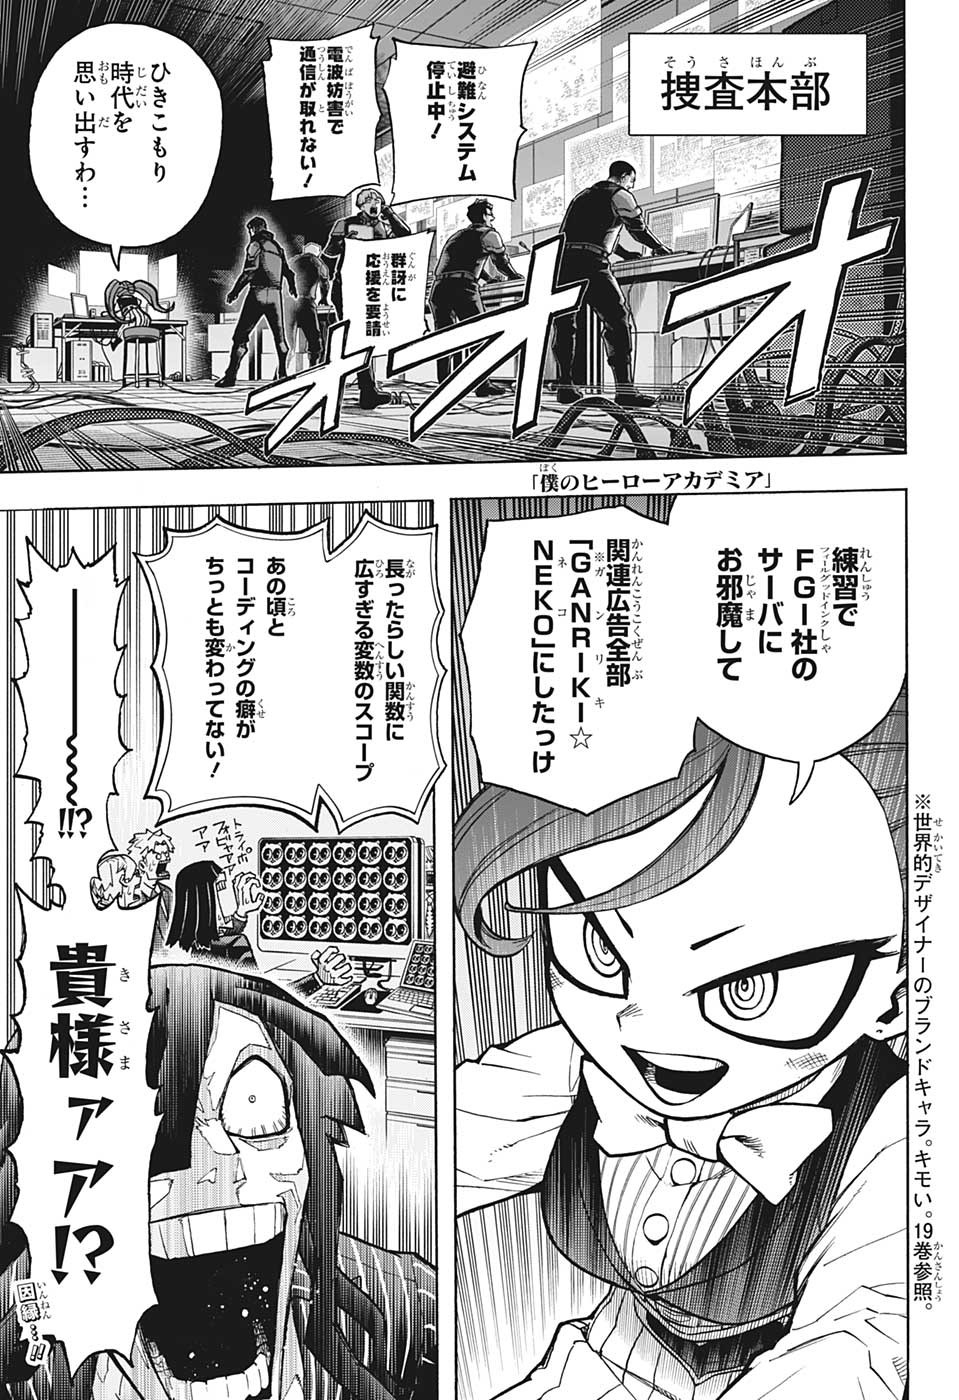 Boku no Hero Academia - Chapter 378 - Page 1